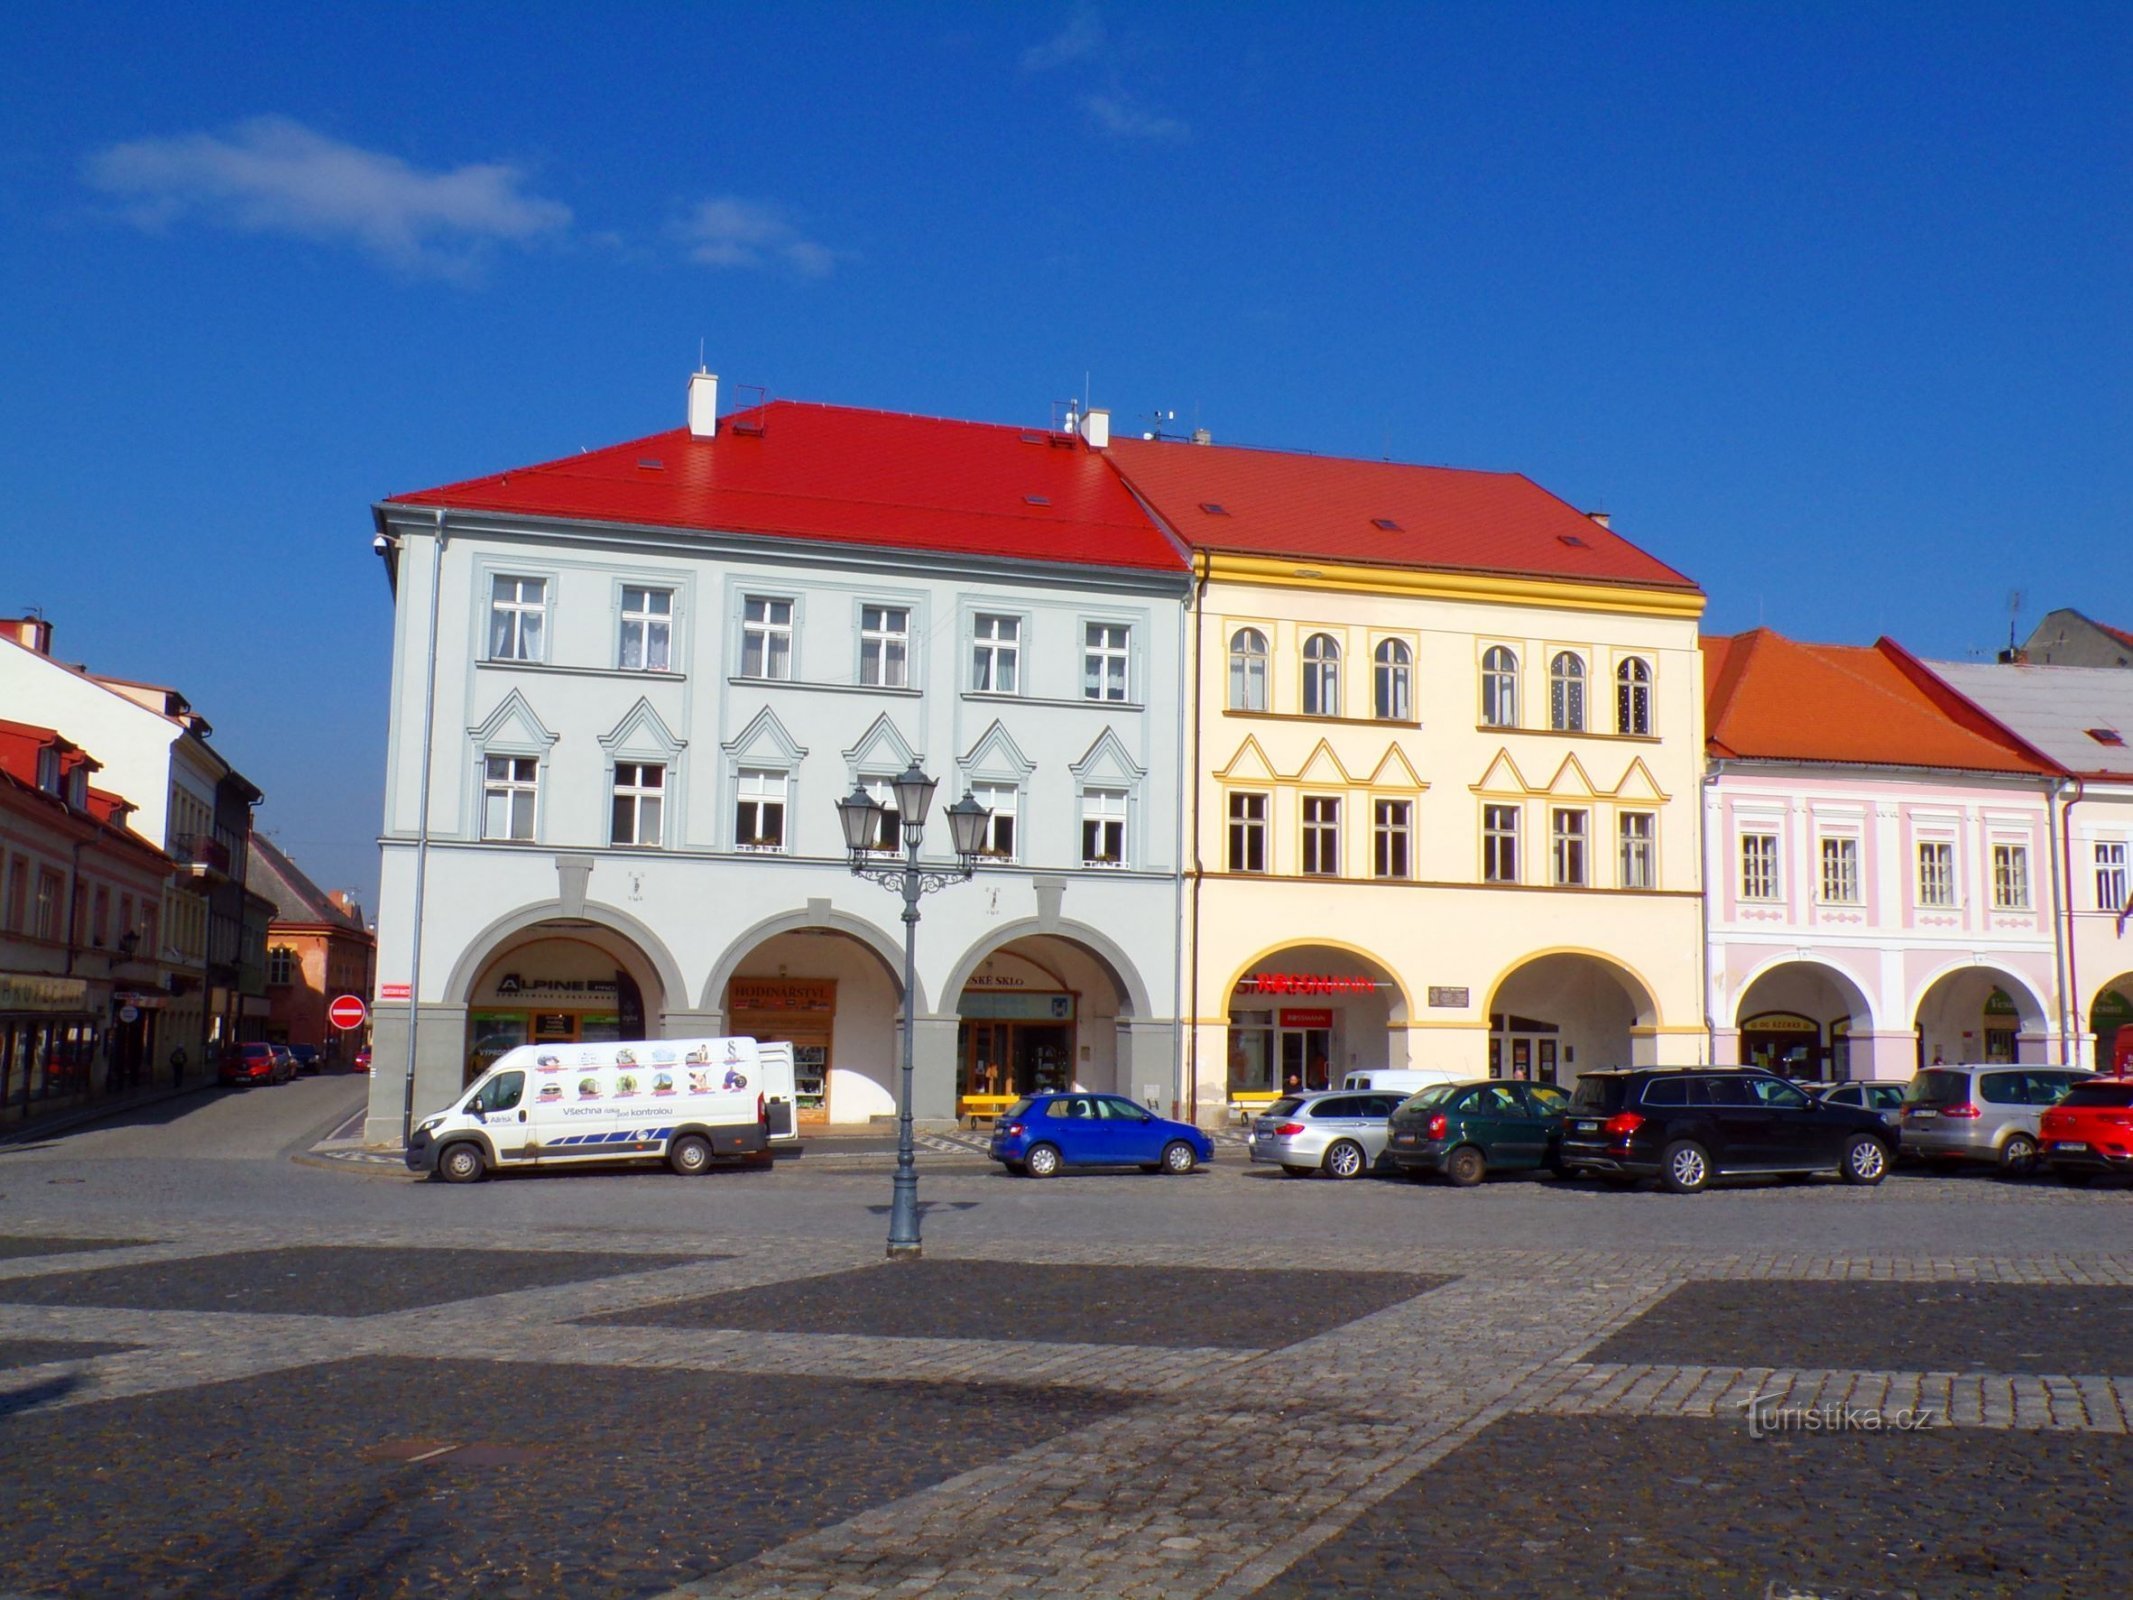 Palackého nr. 73 en Valdštejnovo náměstí nr. 74 (Jičín, 3.3.2022/XNUMX/XNUMX)